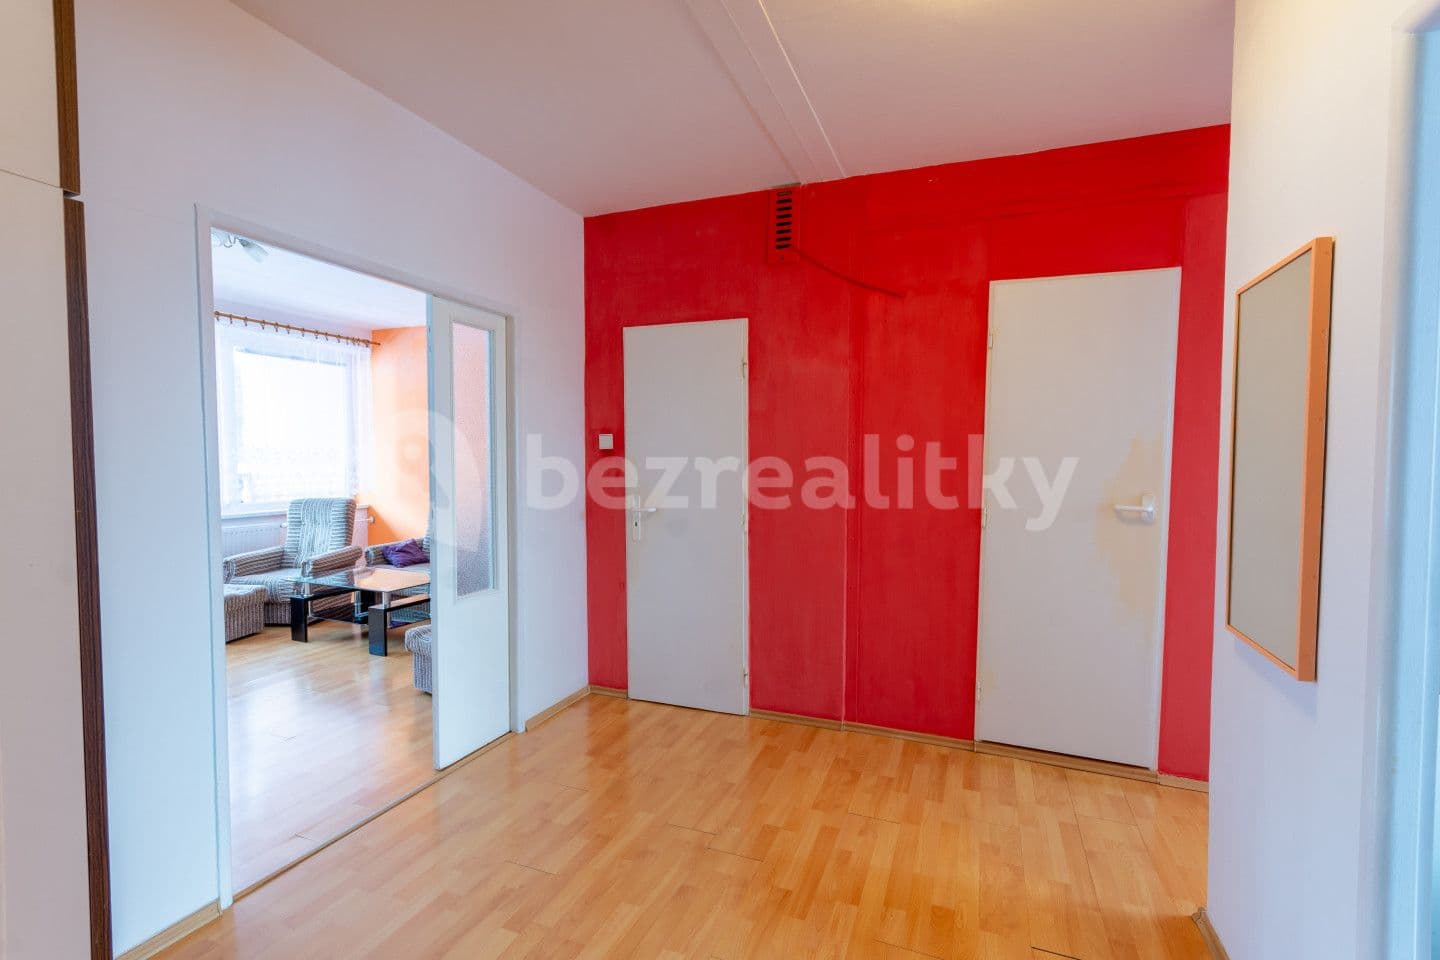 2 bedroom flat for sale, 63 m², Na Sídlišti, Budišov nad Budišovkou, Moravskoslezský Region